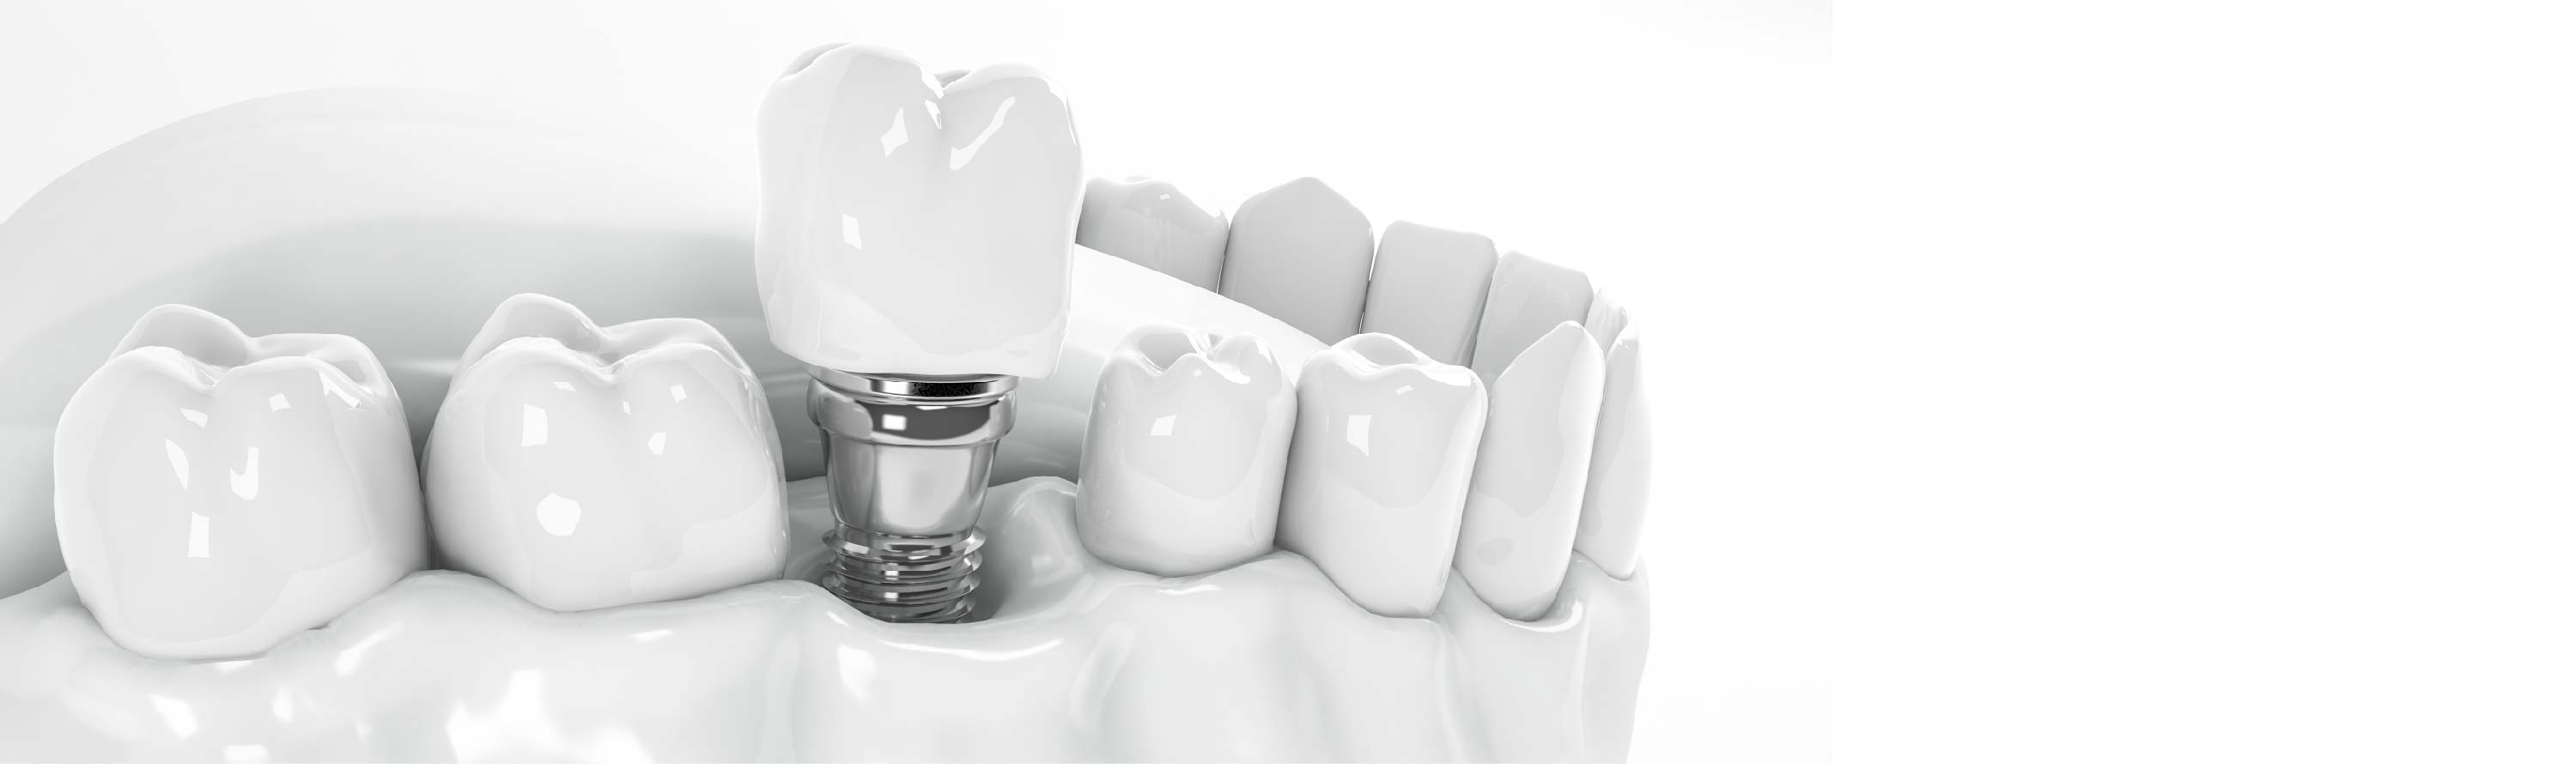 Dental implants process step by step